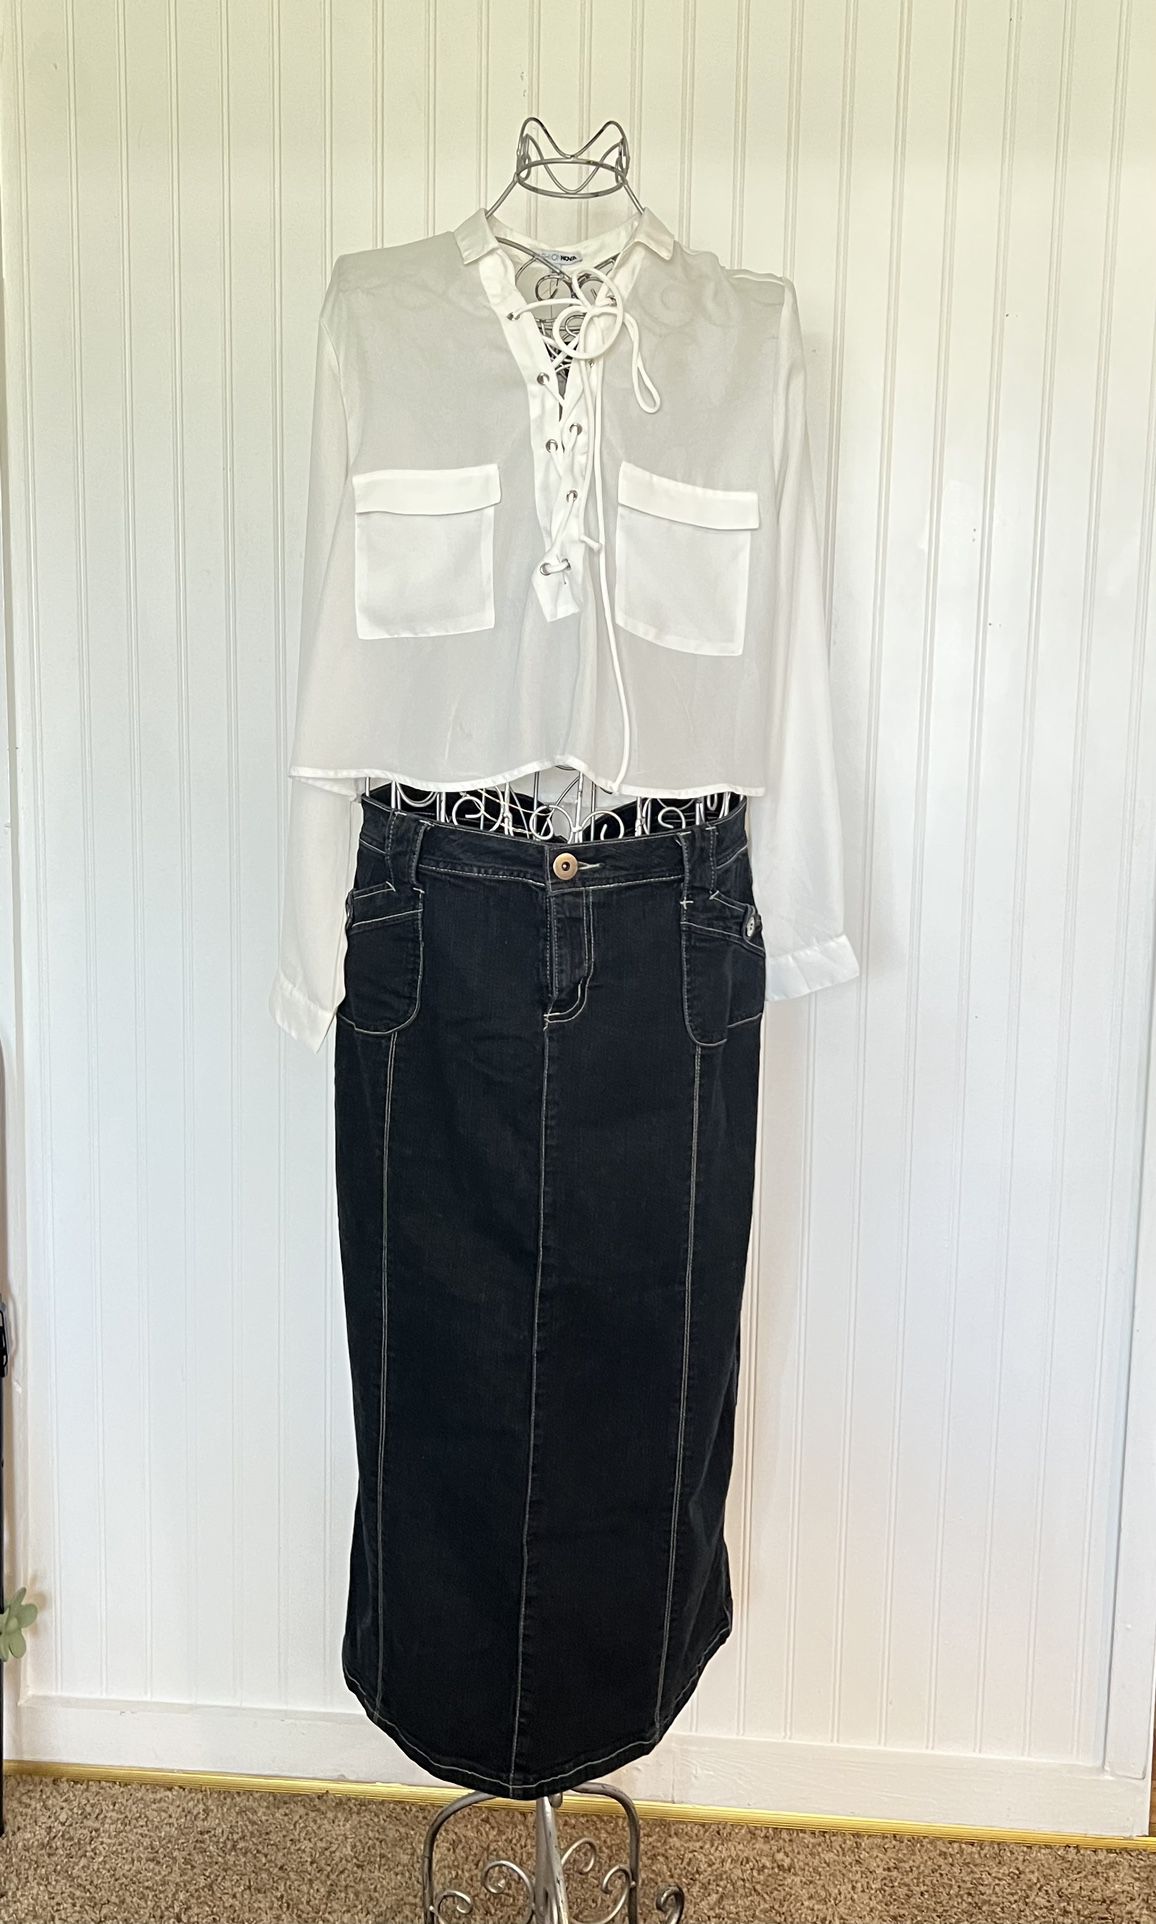 Skirt and blouse XL Skirt waist 18” Skirt length 33”